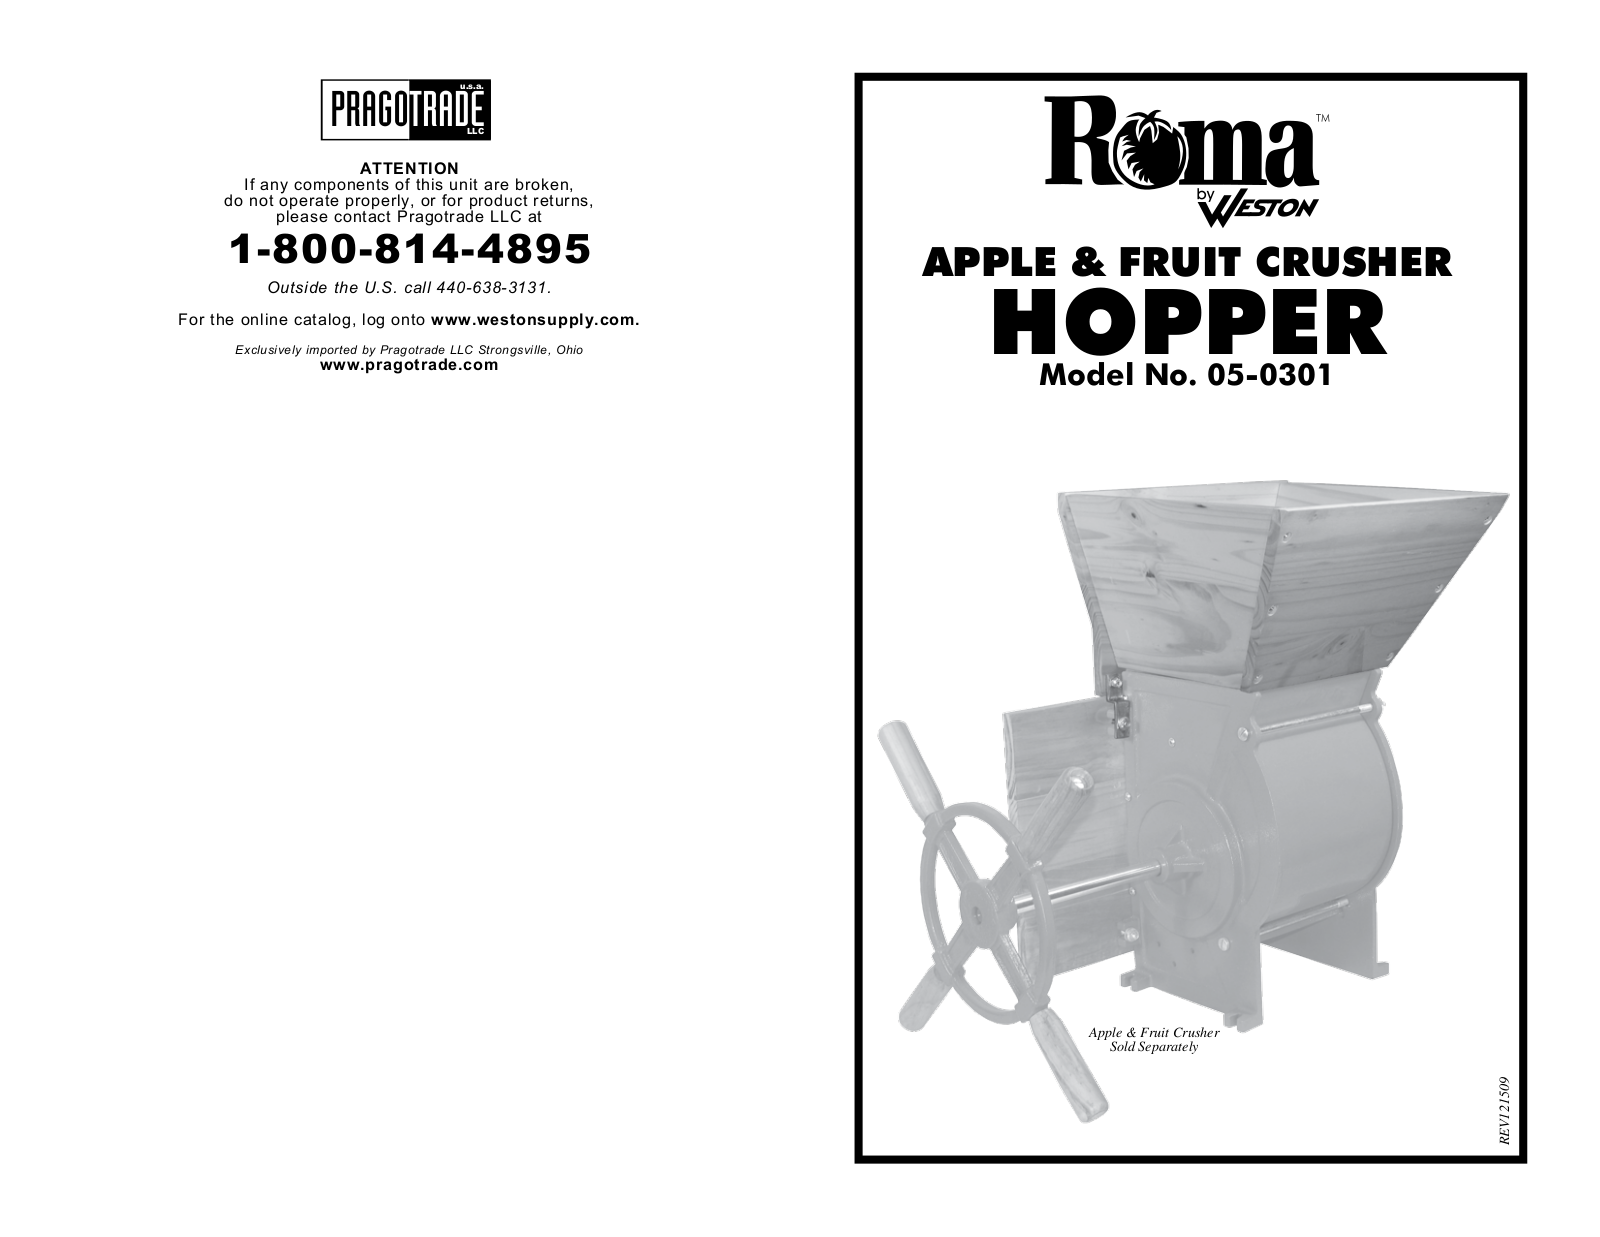 Weston Roma Apple  Fruit Crusher Hopper User Manual